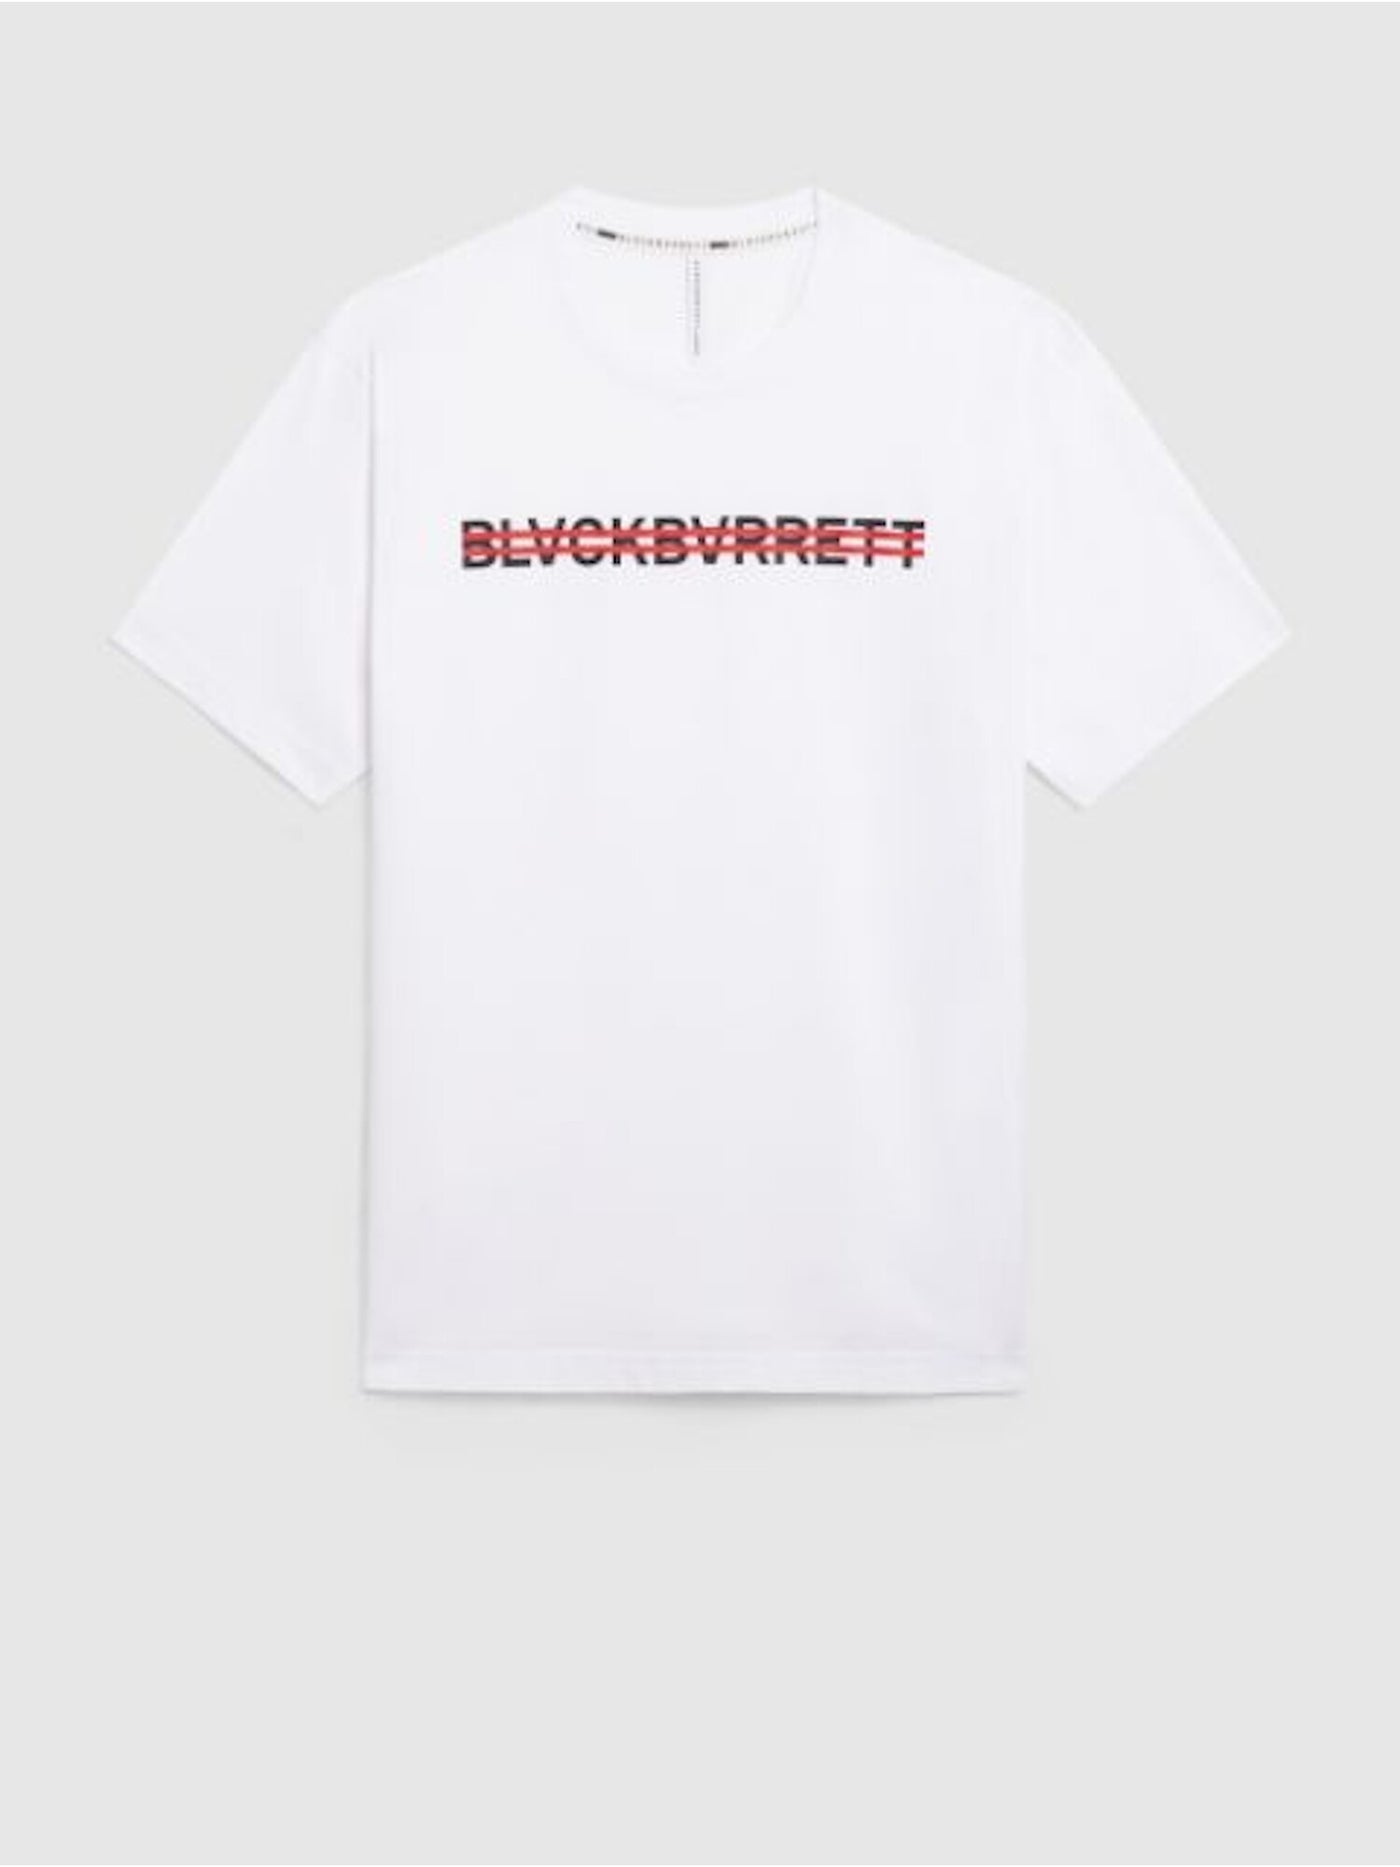 BLACK BARRETT Mens White Graphic Short Sleeve Classic Fit Casual Shirt L